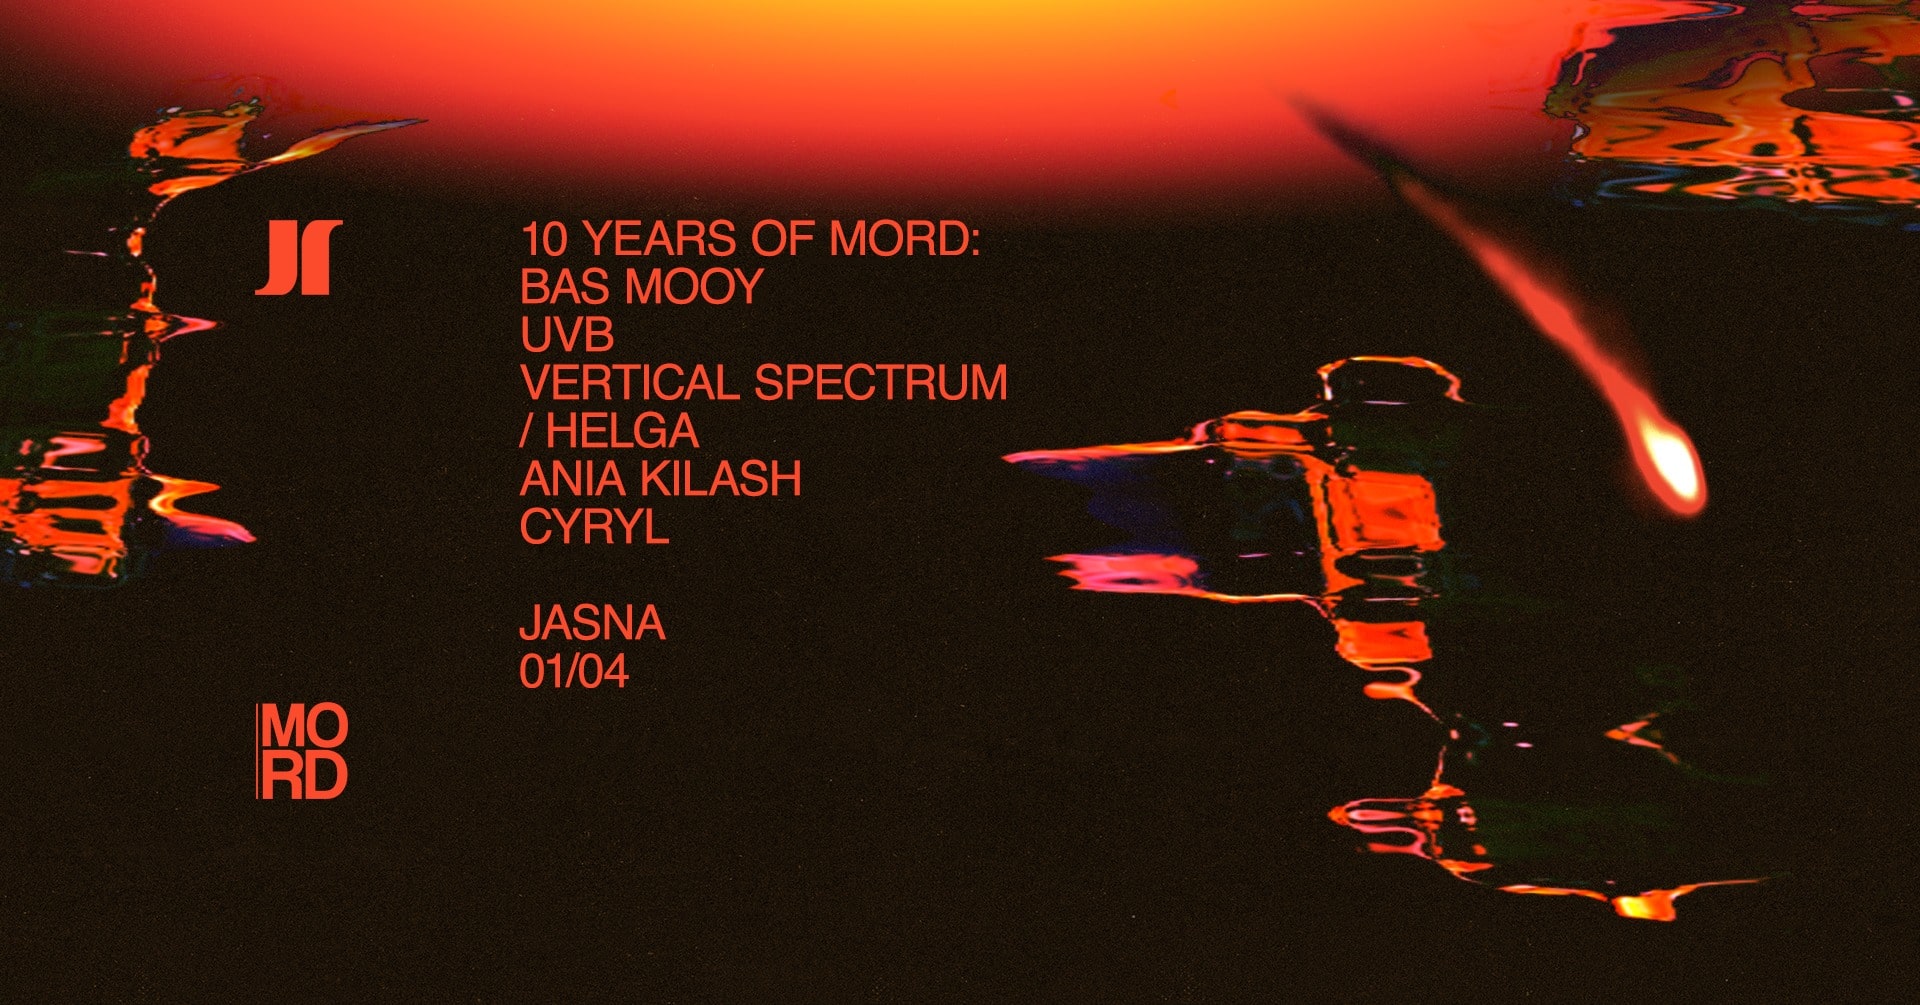 J1 | 10 years of Mord: Bas Mooy, UVB, Vertical Spectrum / Helga, Ania Kilash, Cyryl